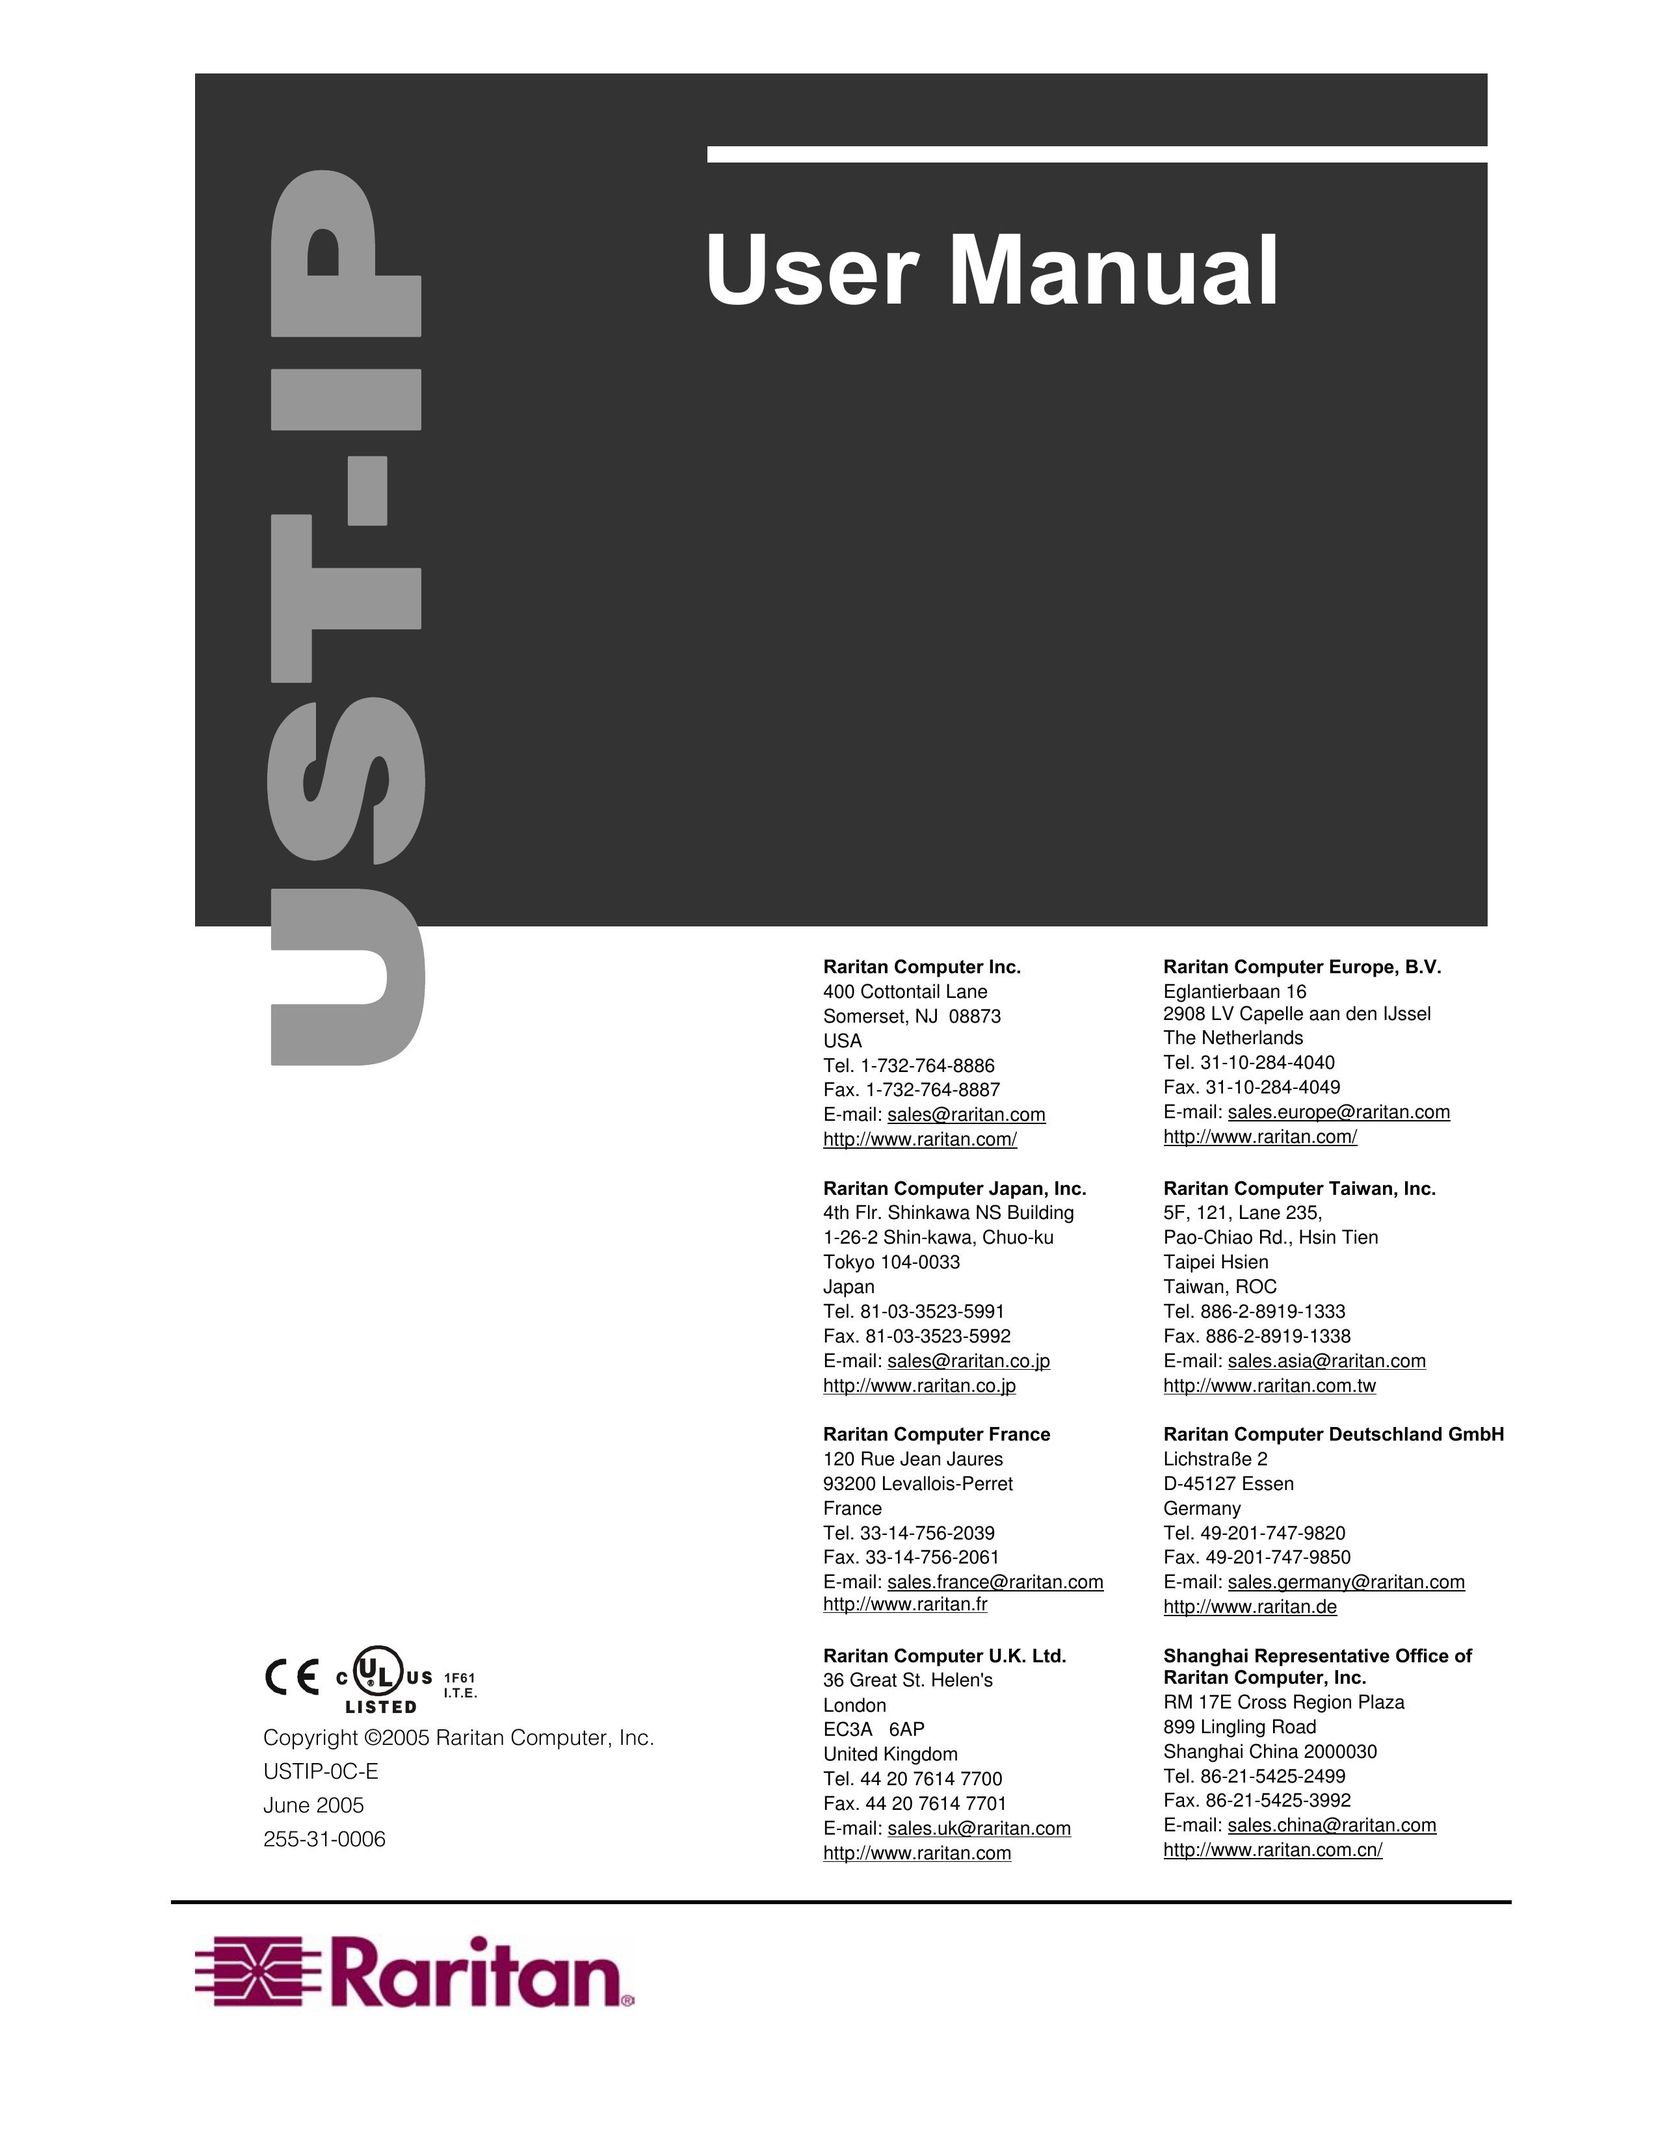 Raritan Computer UST-IP Switch User Manual